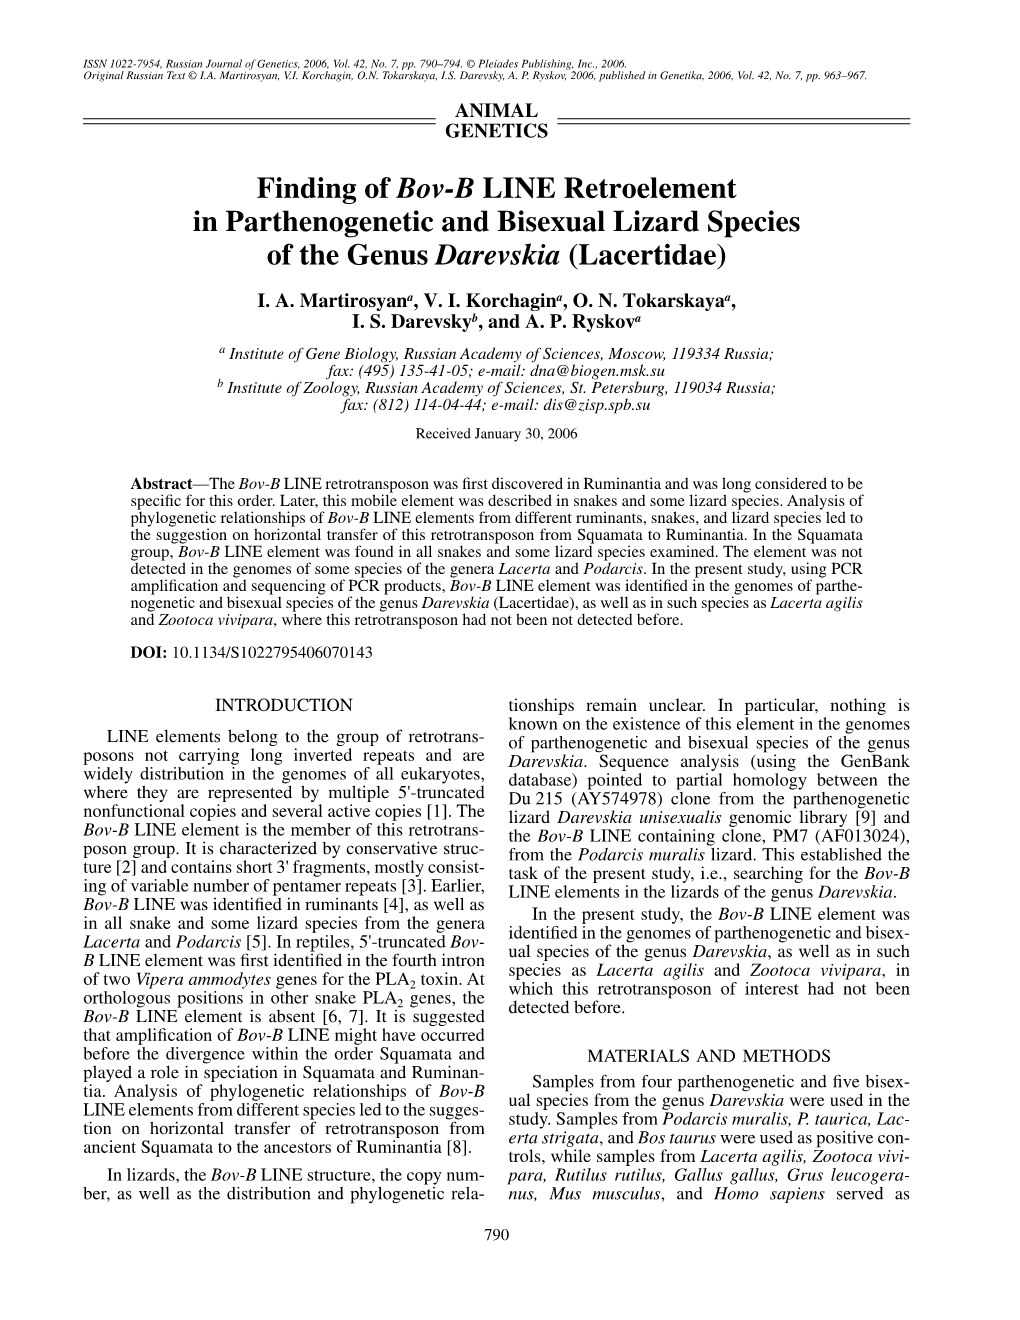 Finding of Bov-B LINE Retroelement in Parthenogenetic and Bisexual Lizard Species of the Genus Darevskia (Lacertidae)